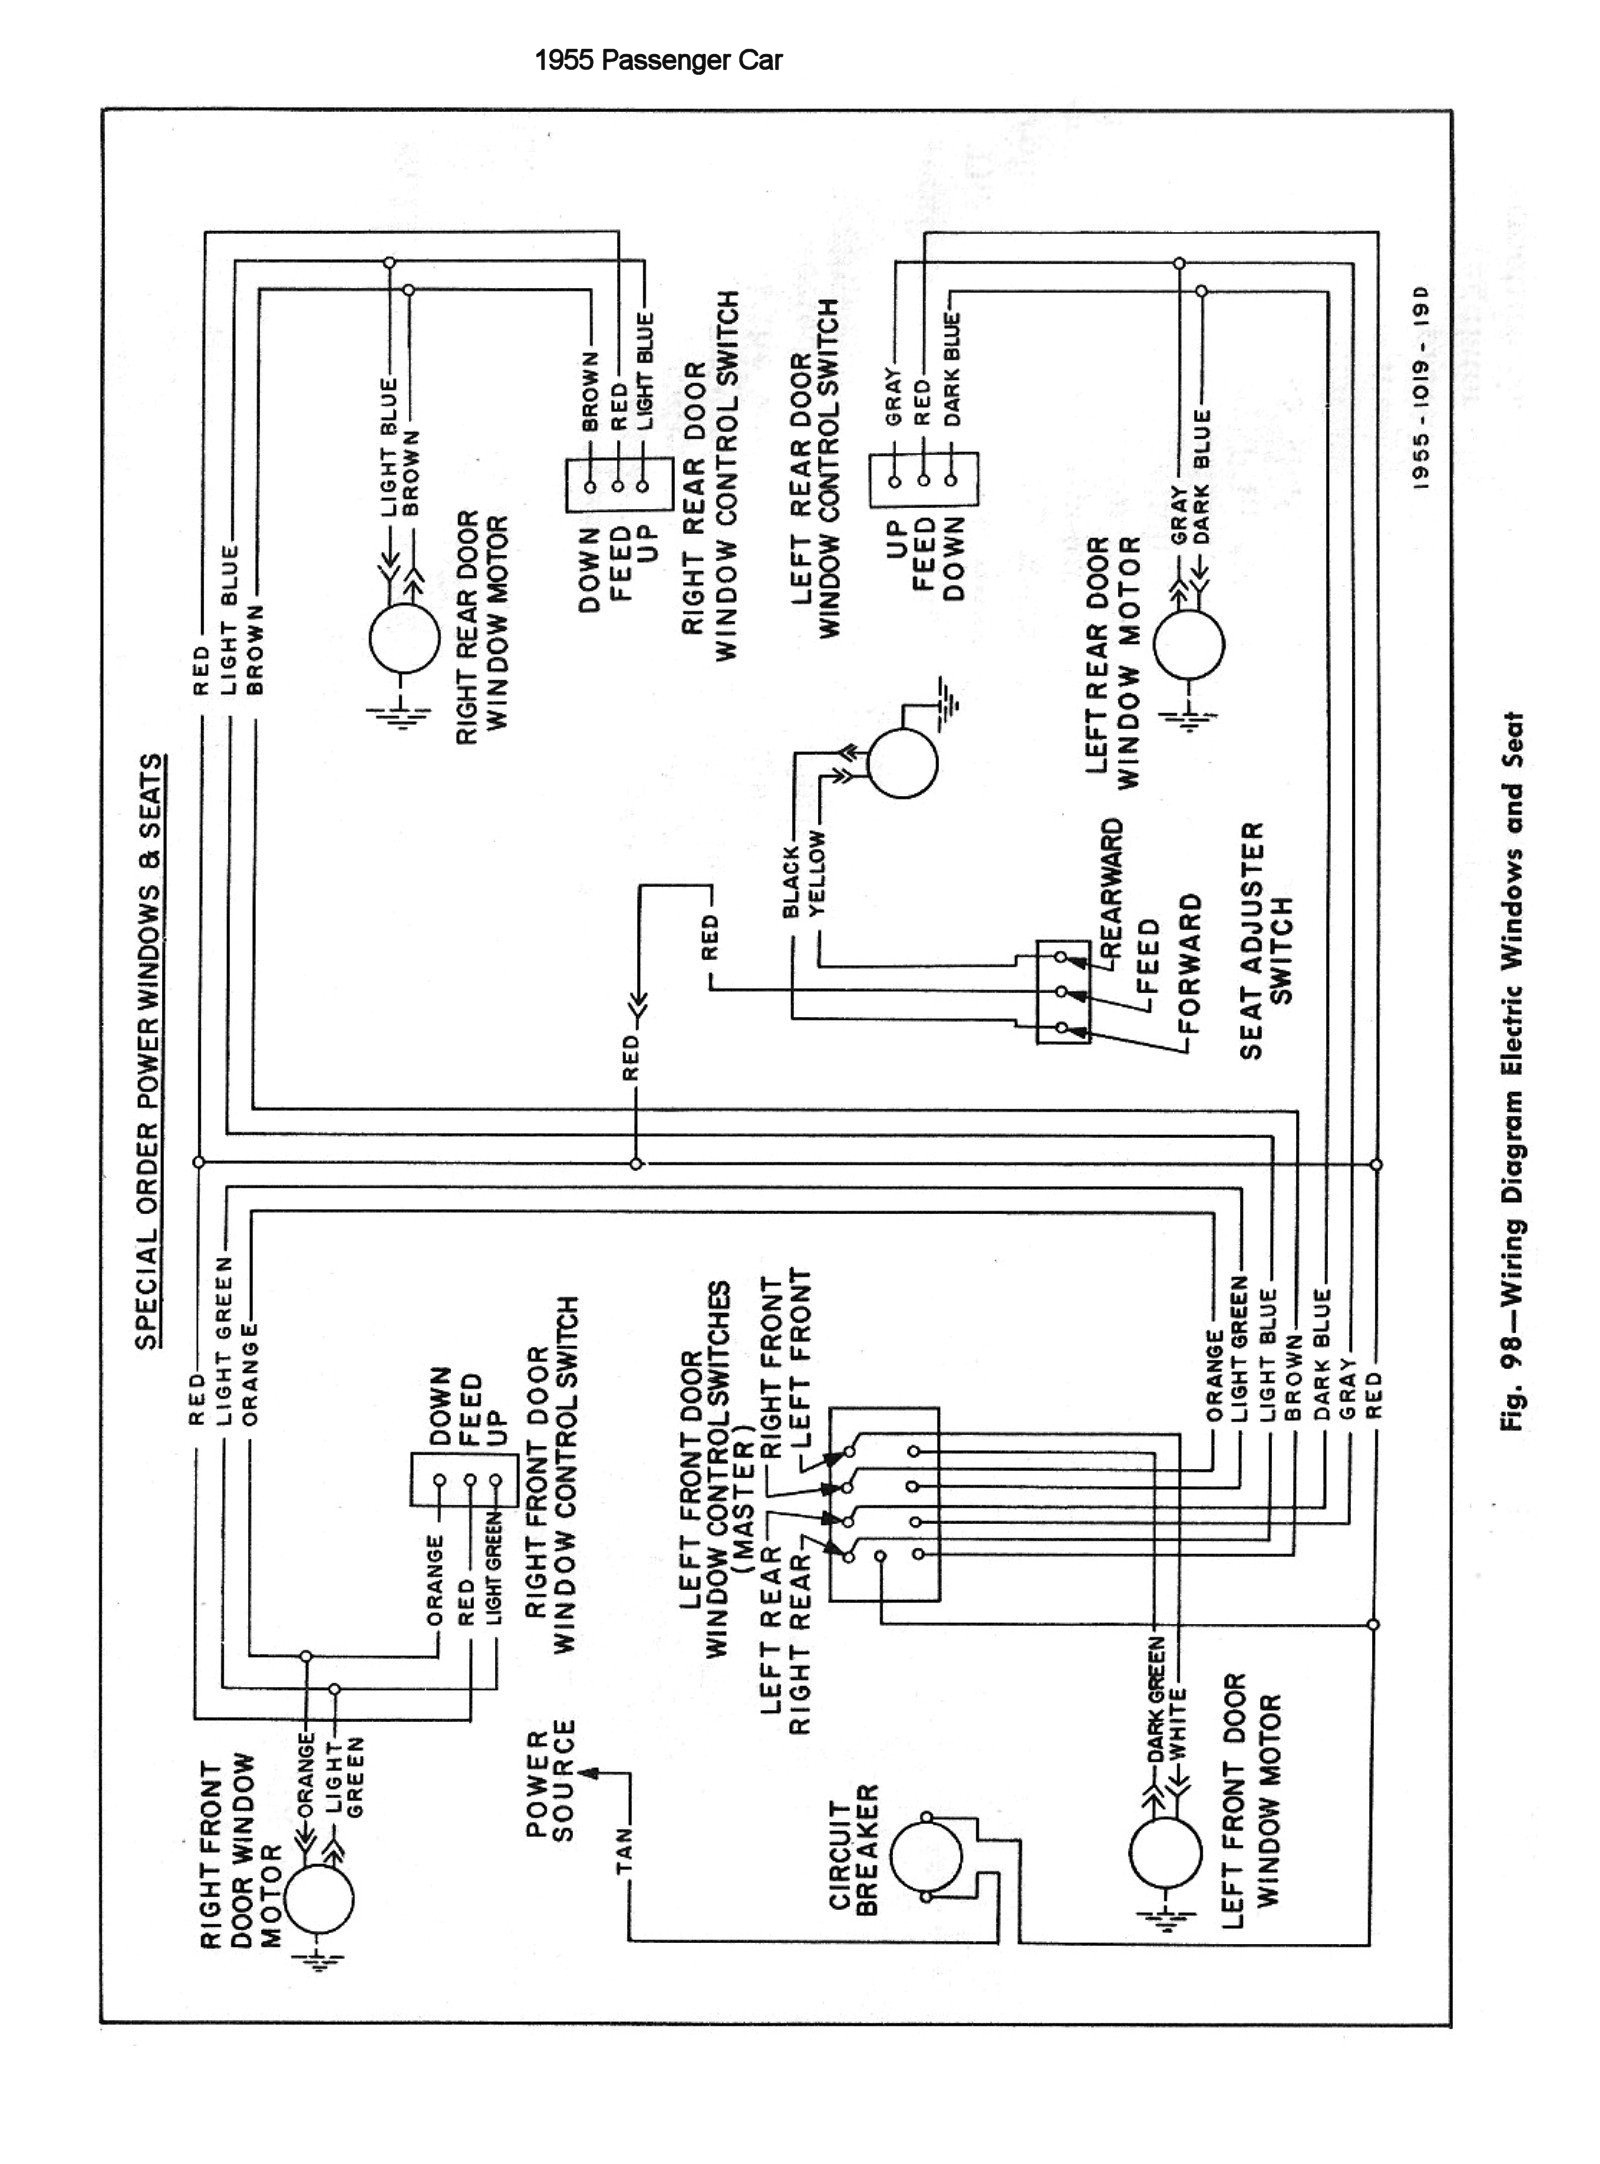 1956 Chevy Truck Wiring Diagram | Manual E-Books - 1994 Chevy Truck Wiring Diagram Free